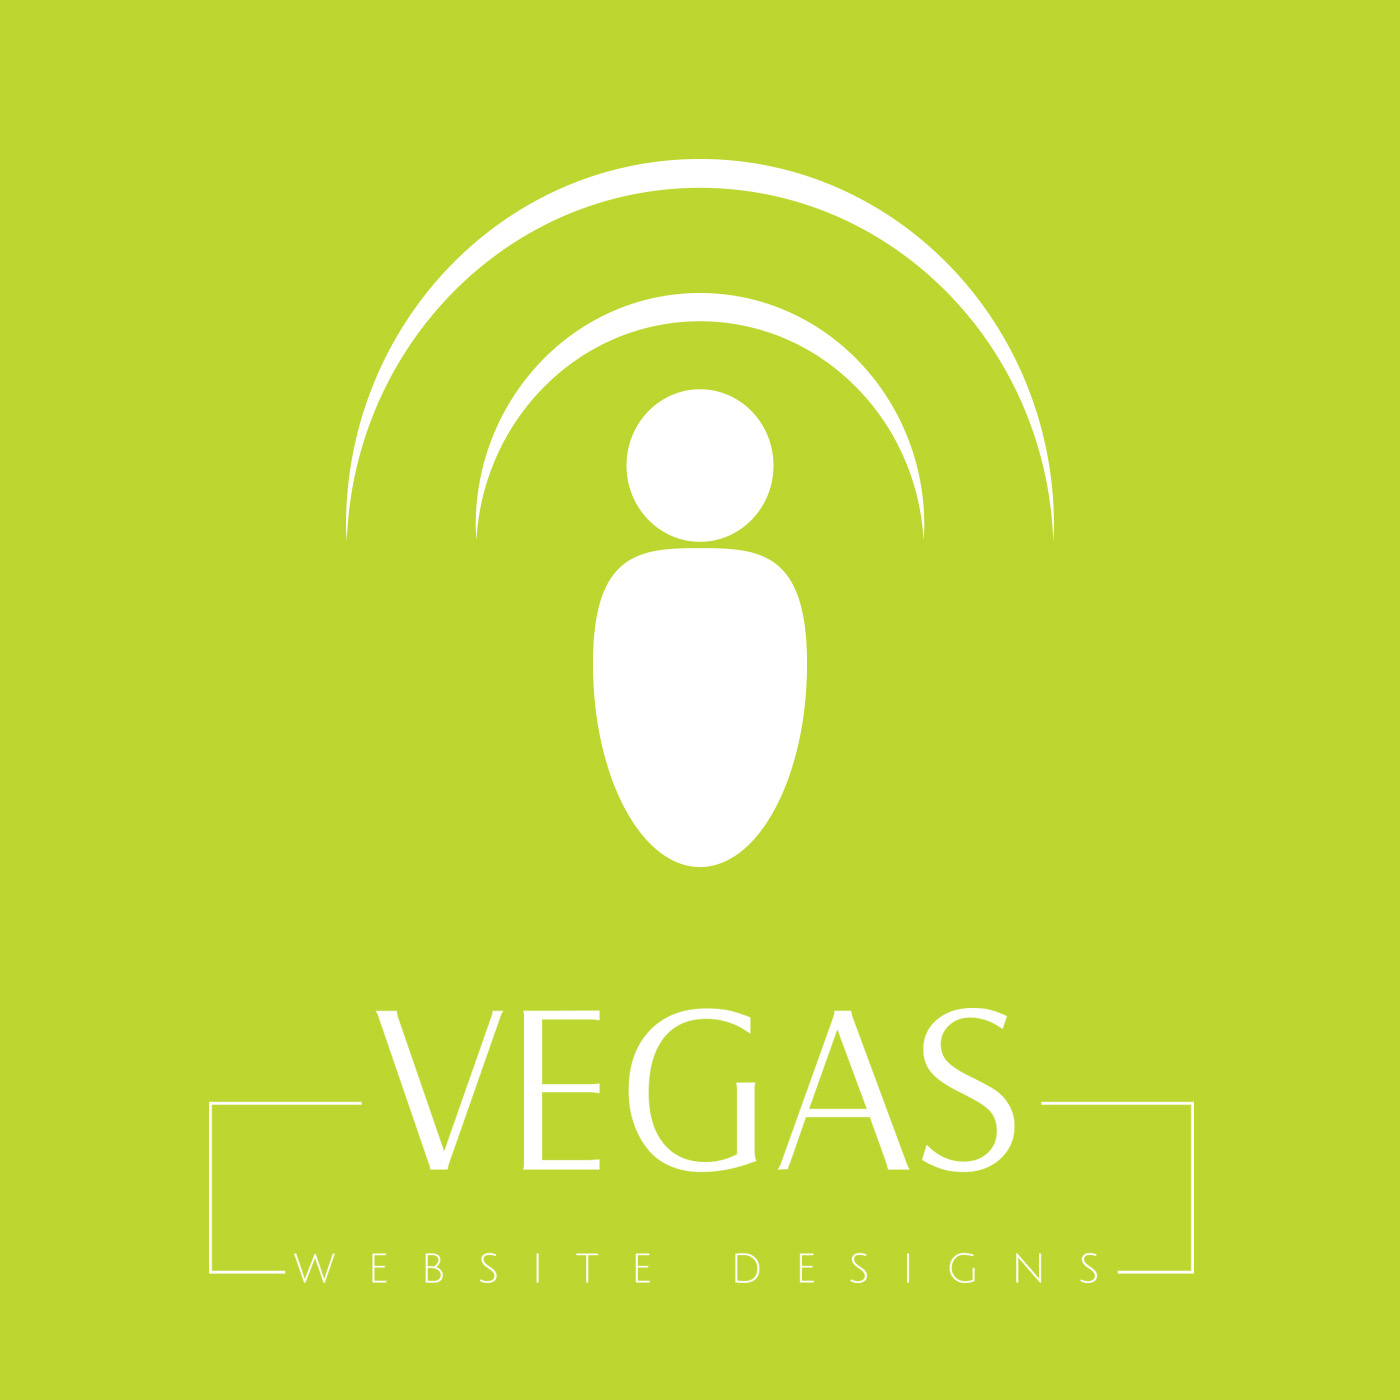 Las Vegas Web Design & Marketing Insights